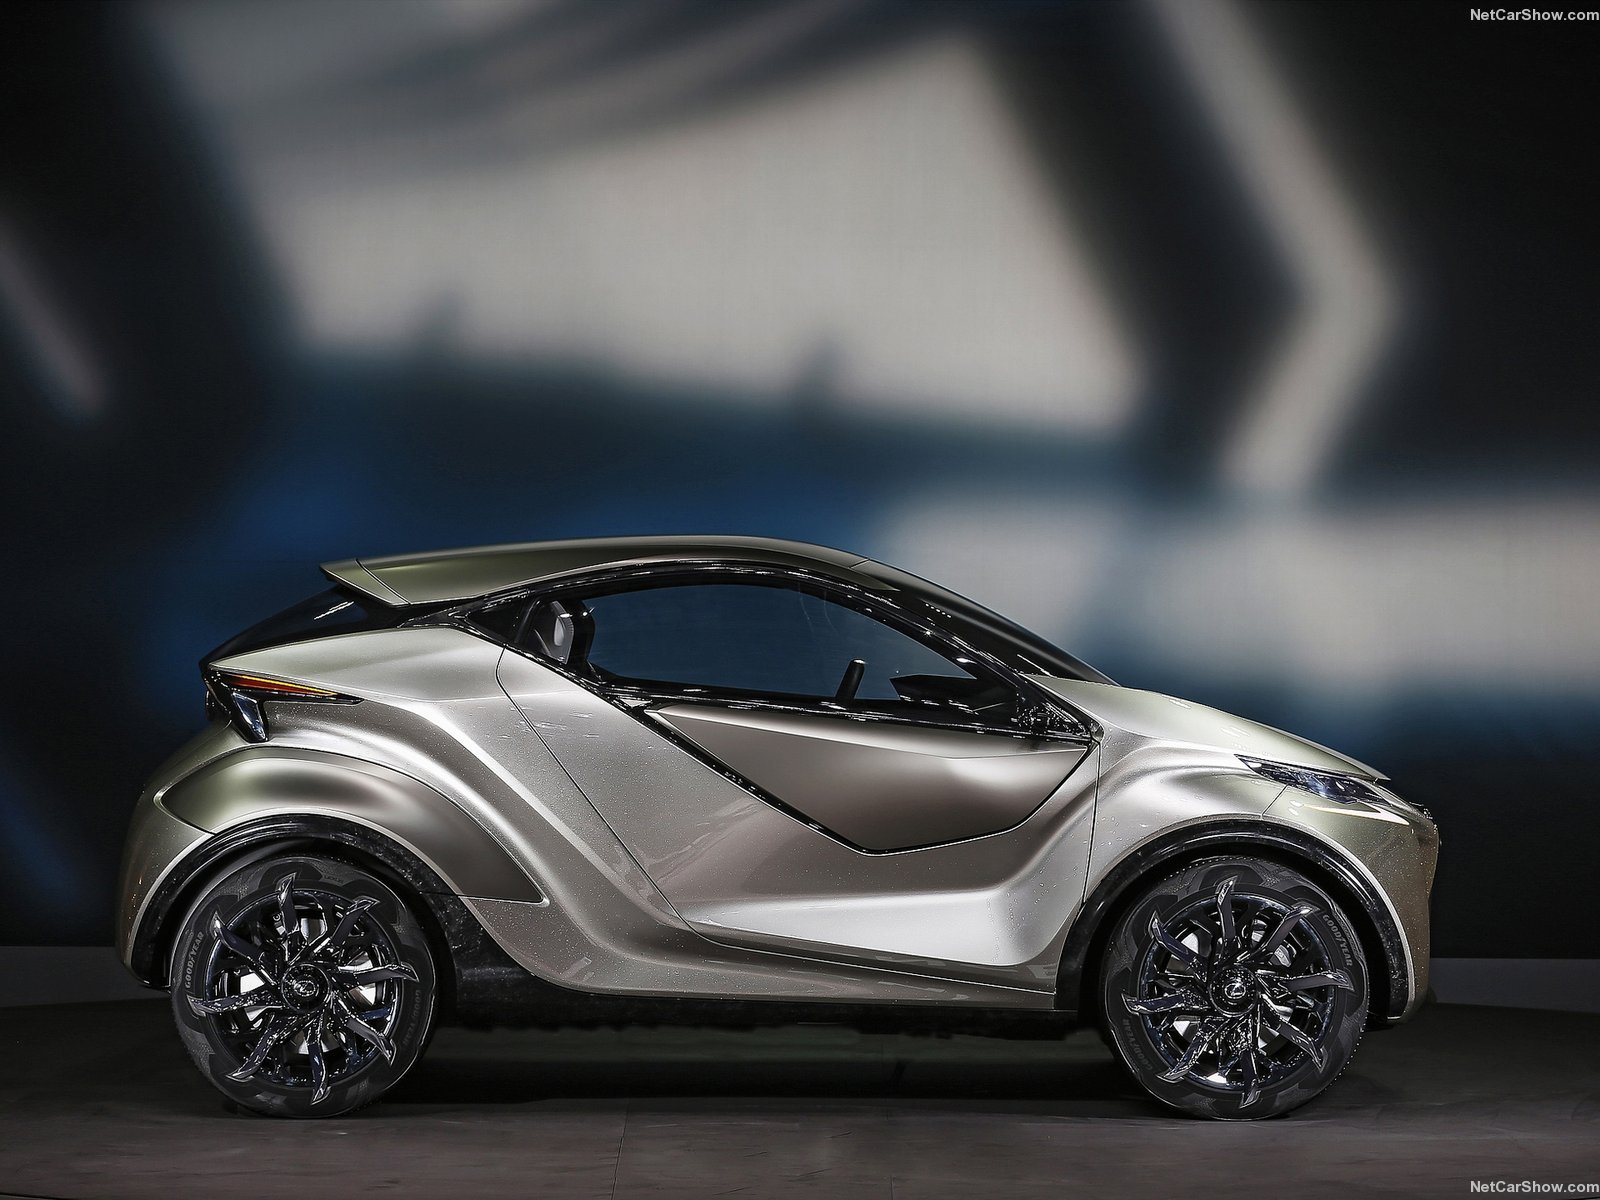 2015, Concept, Lexus, Lf sa, Cars Wallpaper